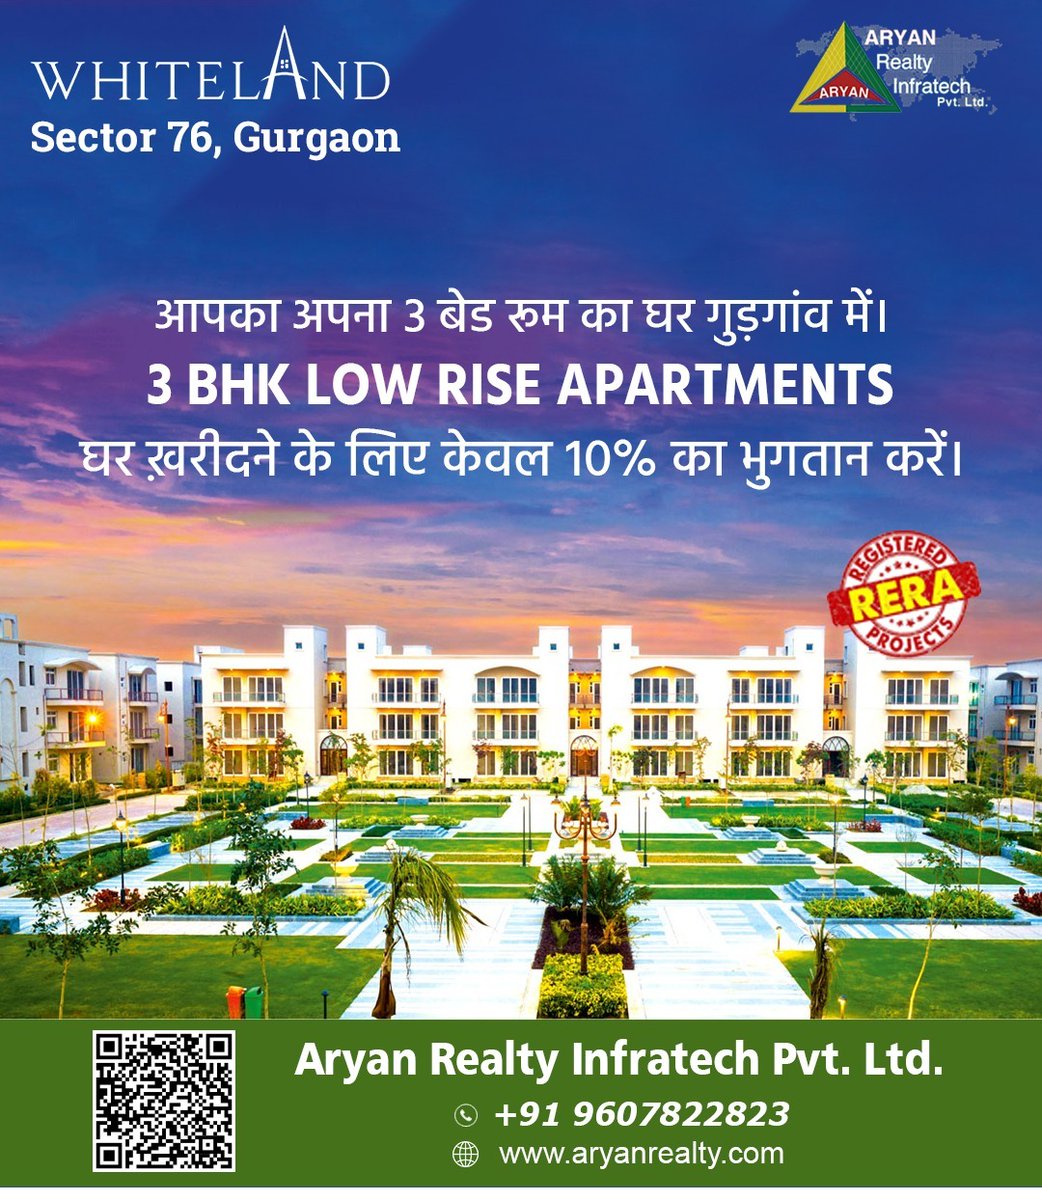 आपका अपना 3 बेड रूम का घर गुडगाँव में |
3BHK Low Rise Apartments
घर खरीदने के लिए केवल 10% का भुगतान करे |

#aryanrealtyinfratech #WhitelandBlissville #whiteland #Launches #Sector76  #architecture #luxury #homes #newhome #property #Gurgaon #Sector76Gurgaon #commercialproperty